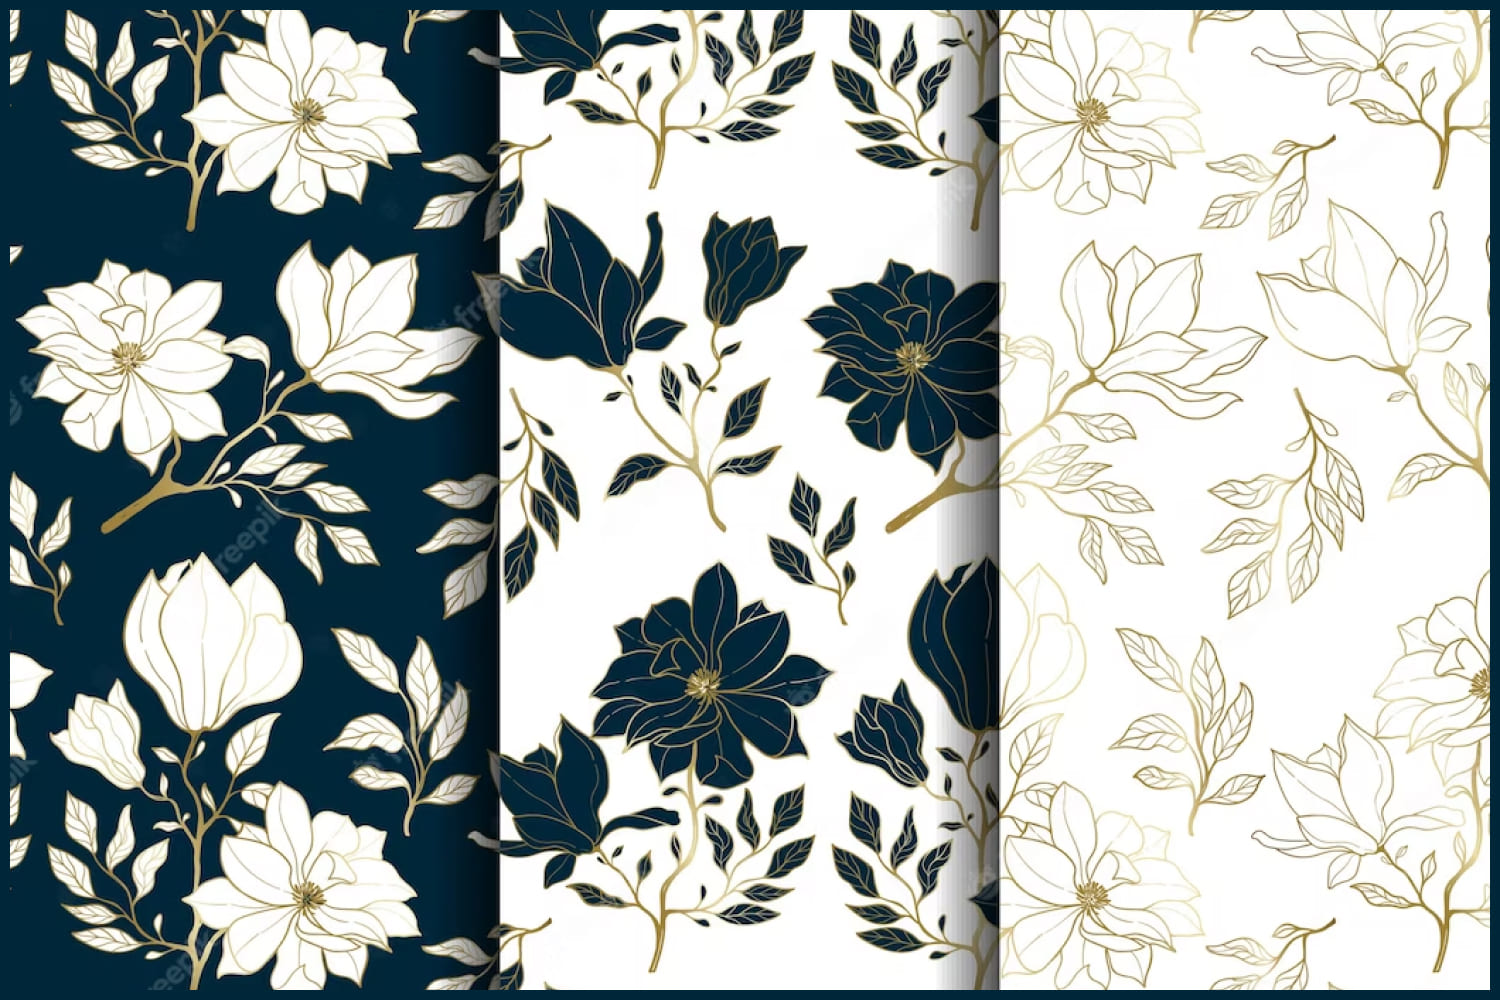 Set of 3 flower background patterns.